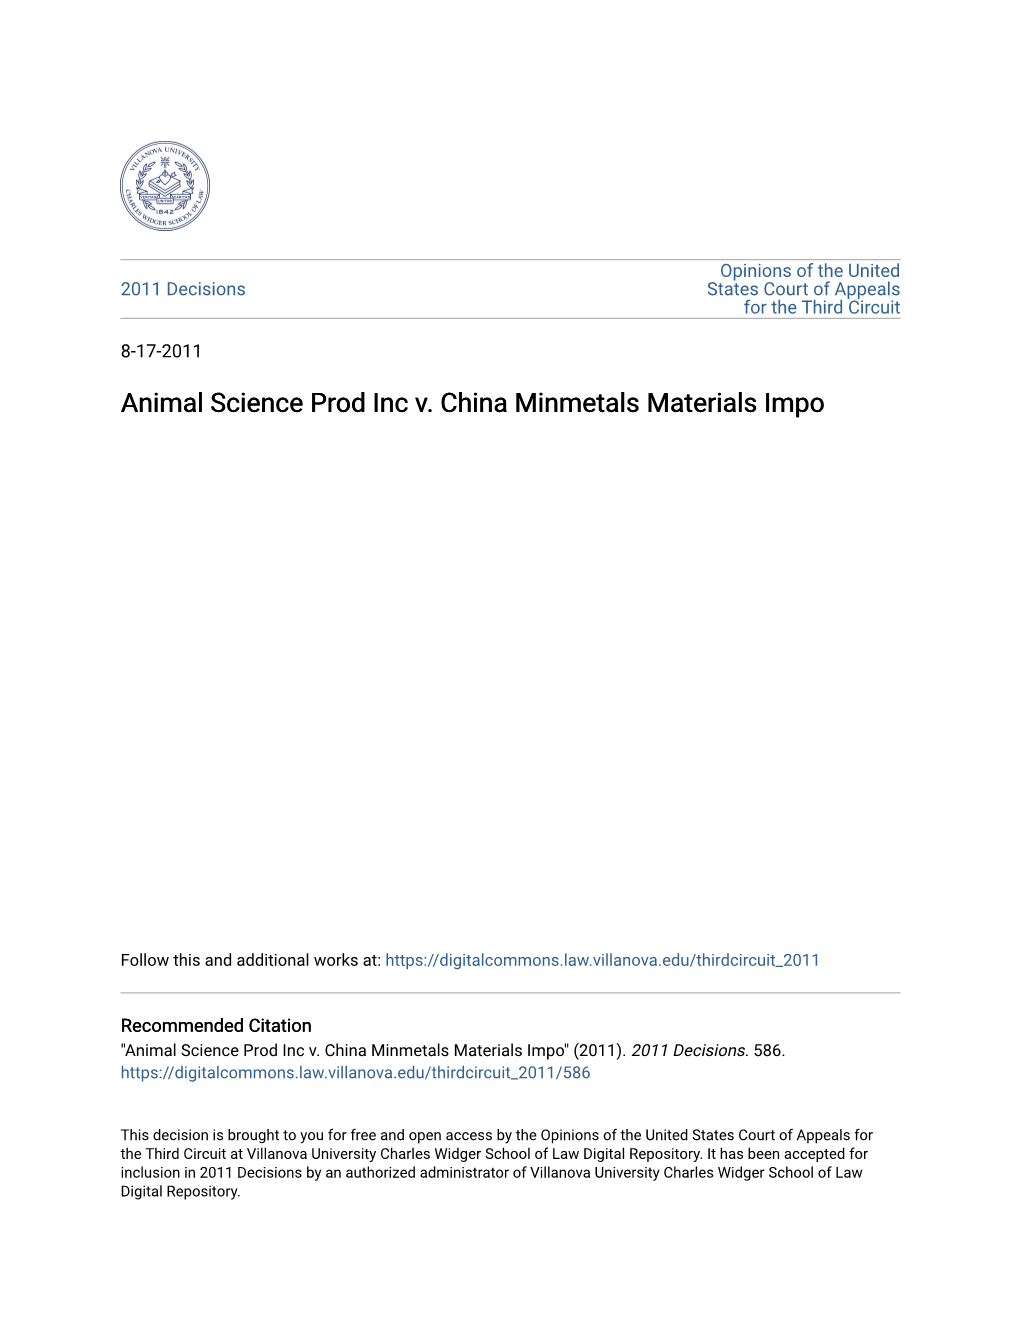 Animal Science Prod Inc V. China Minmetals Materials Impo